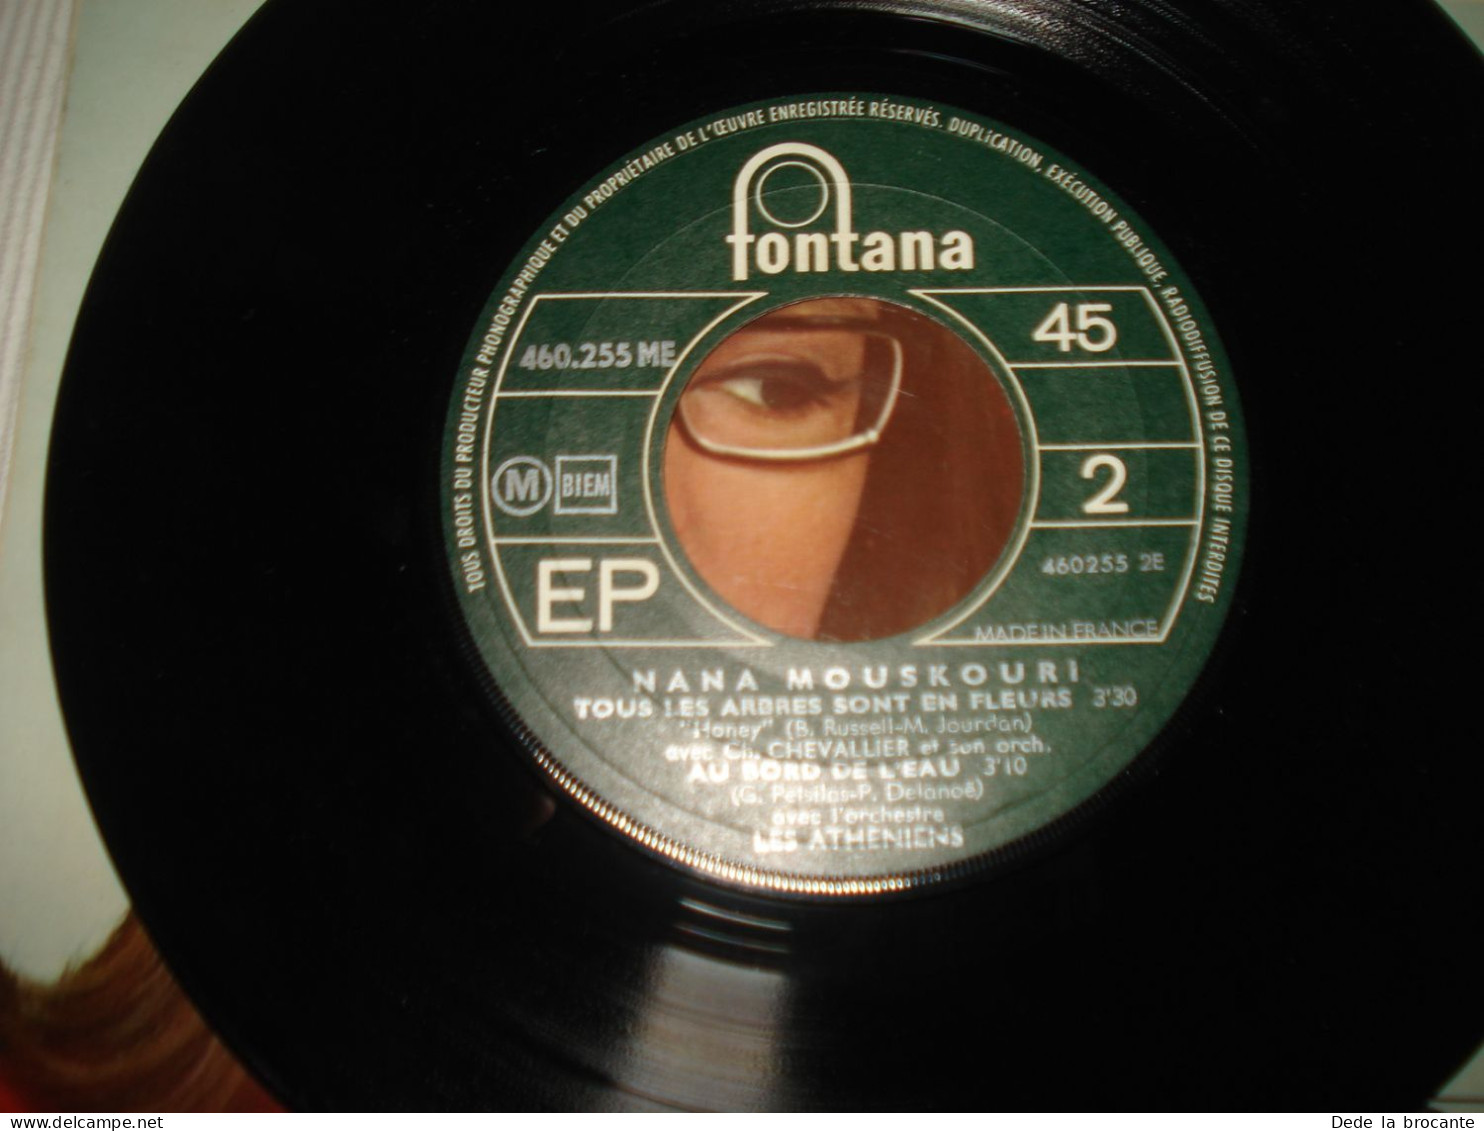 B13 / Nana Mouskouri – Coucourou Paloma - EP – 460 255 ME - Fr 1968  NM/NM - Formats Spéciaux